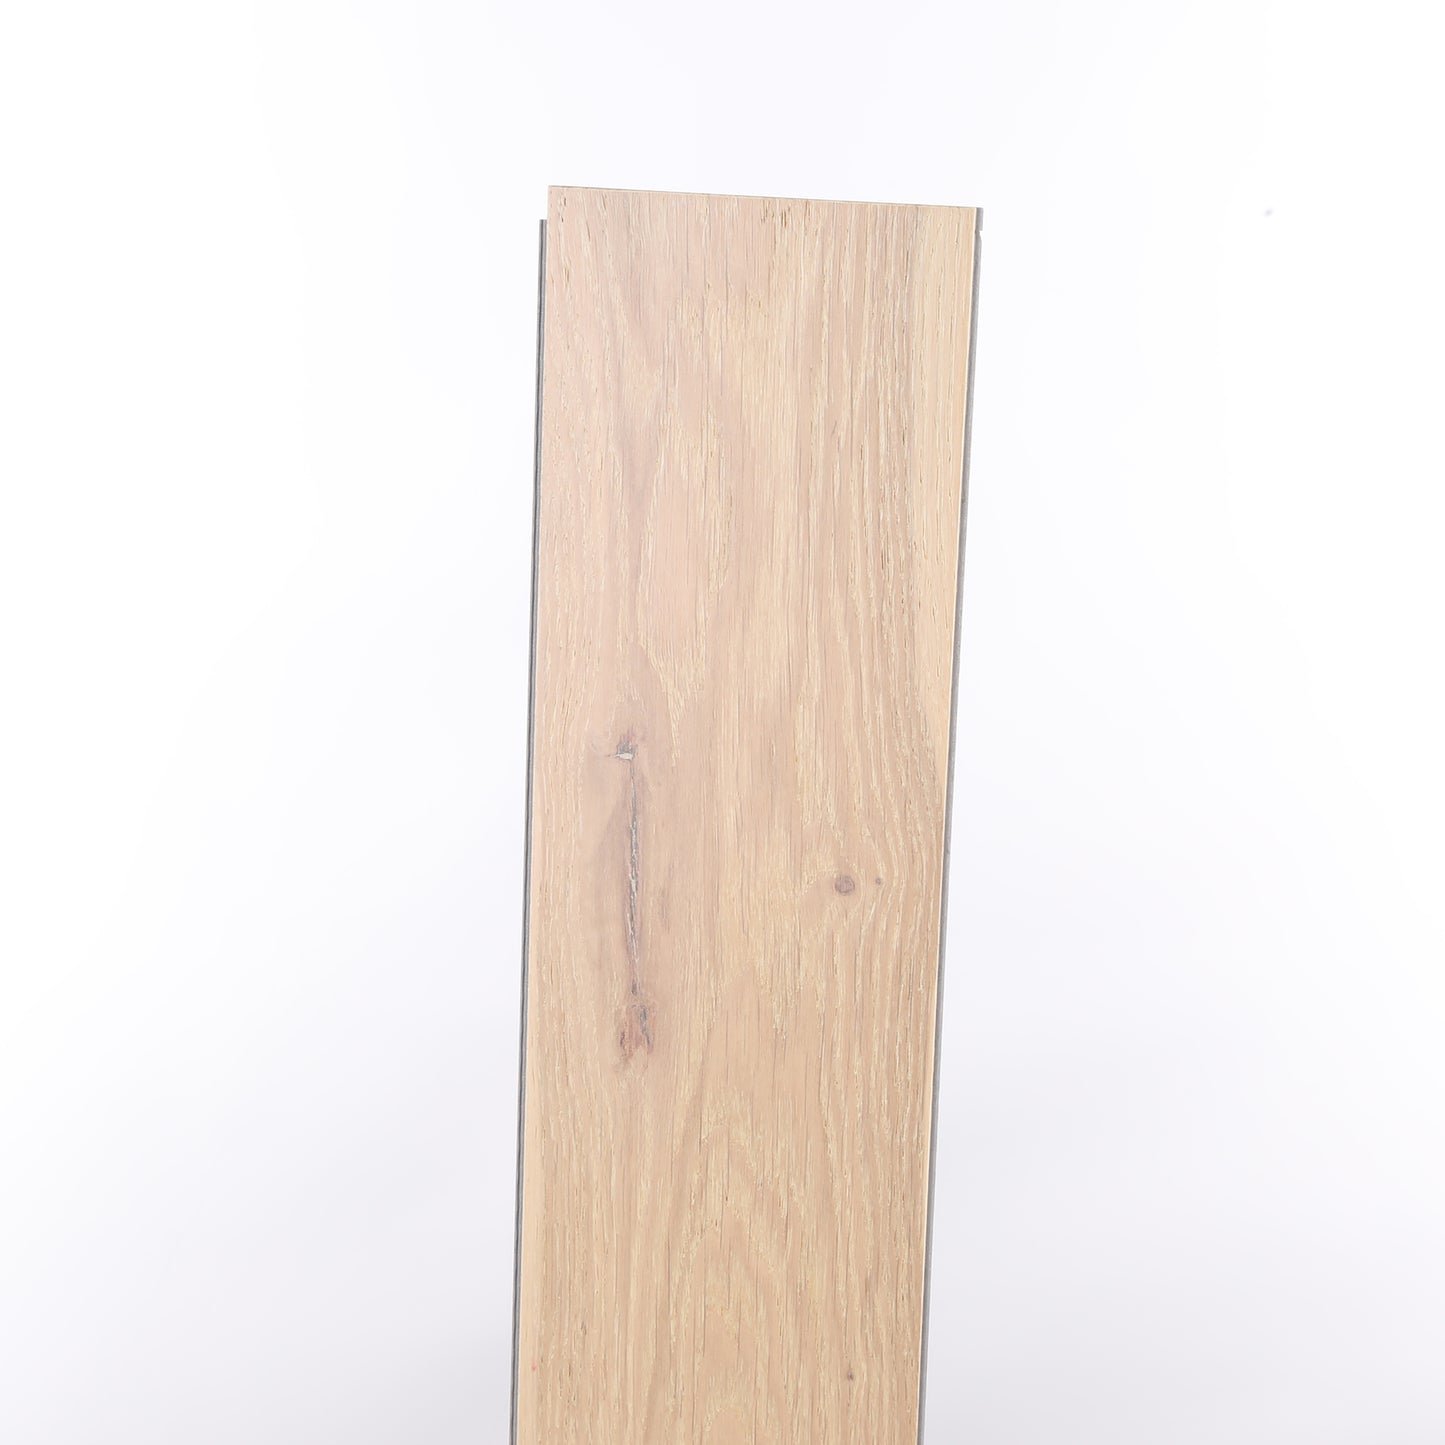 7mm Butterscotch White Oak Waterproof Engineered Hardwood Flooring 5 in. Wide x Varying Length Long